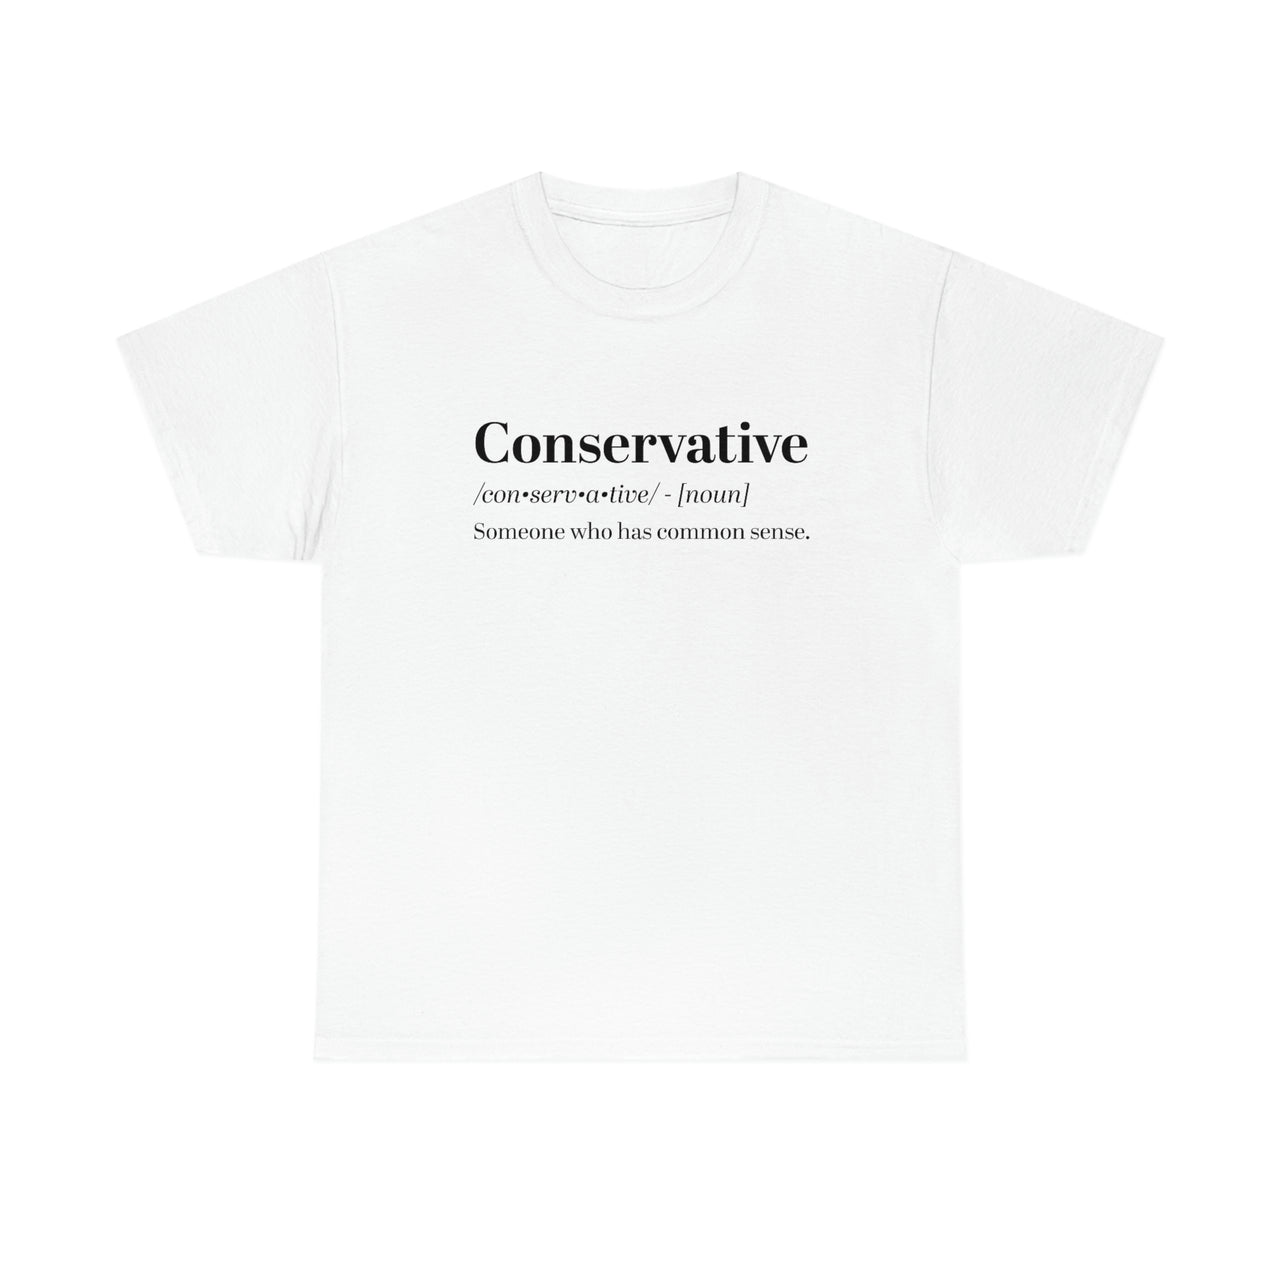 Conservative Definition T-Shirt